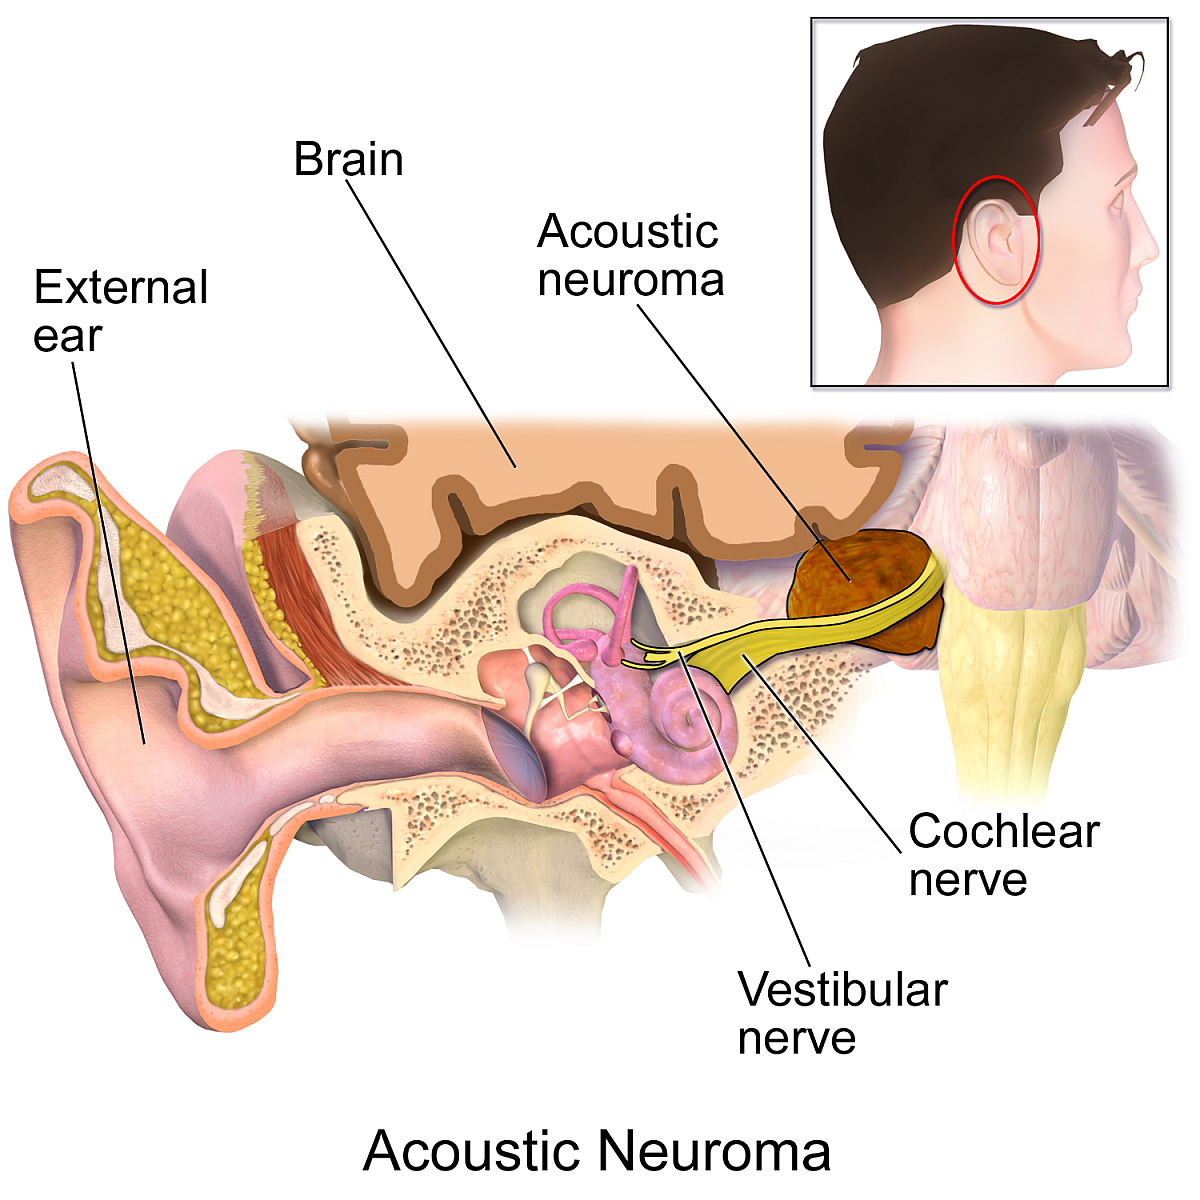 Acoustic neuroma anatomy